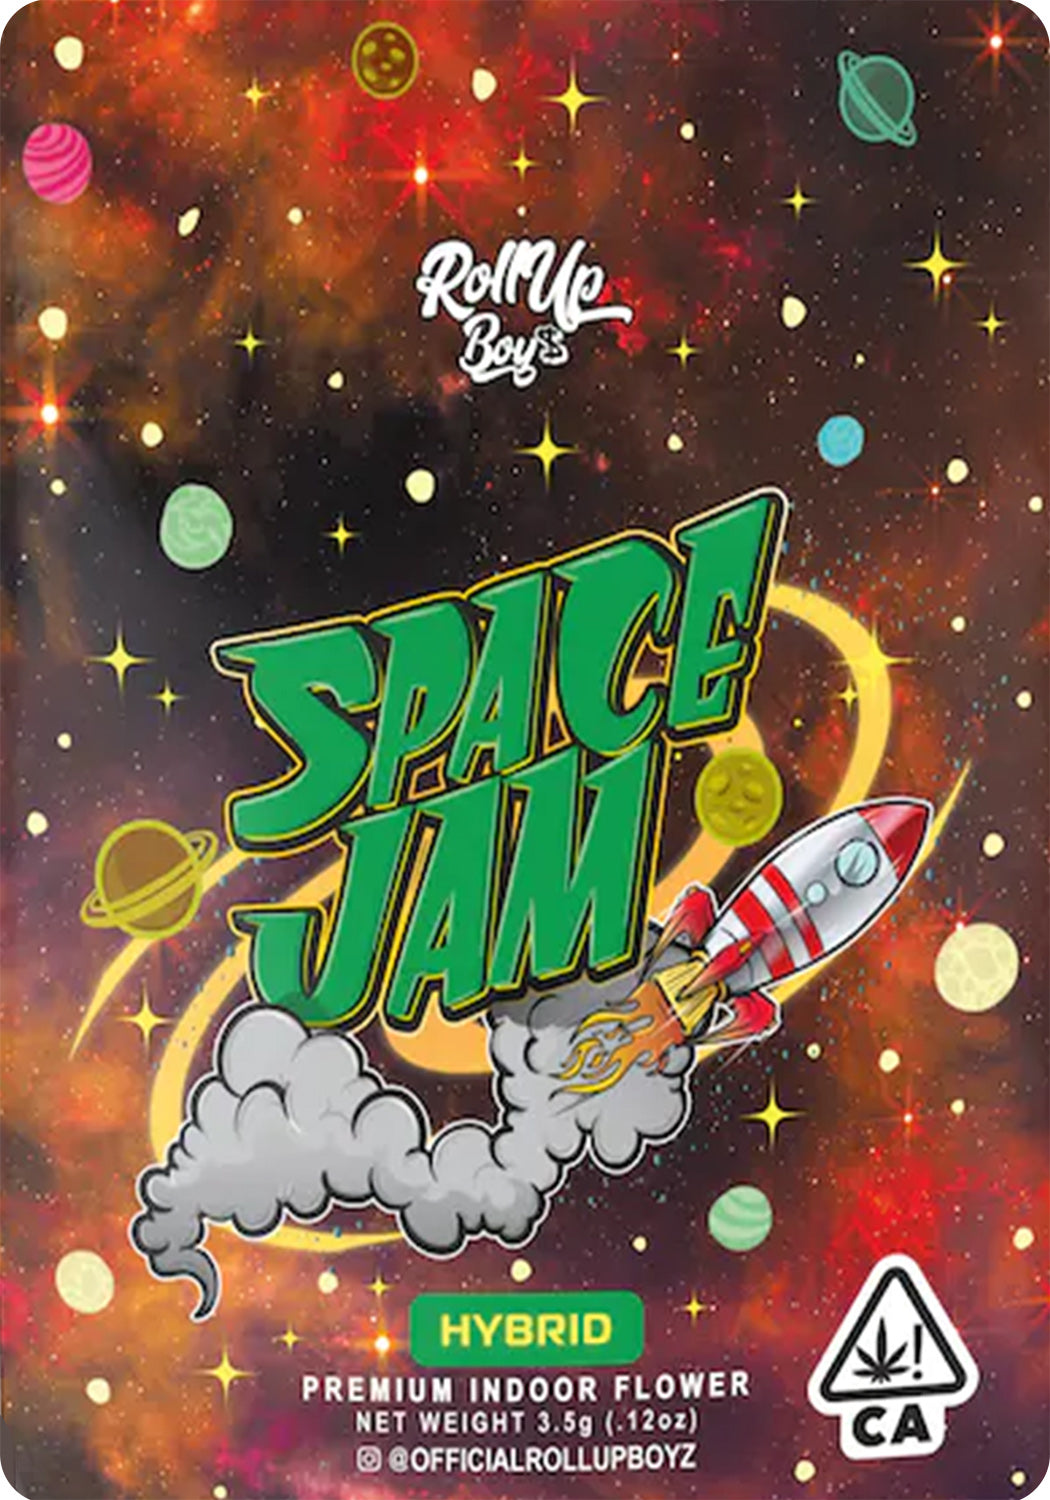 Space Jam Mylar Bags 1g Gram 3.5g Eighth 7g Quarter 28g Oz Ounce 112g Quarter Pound Roll Up Boys Sticker Bag Fire Mylar